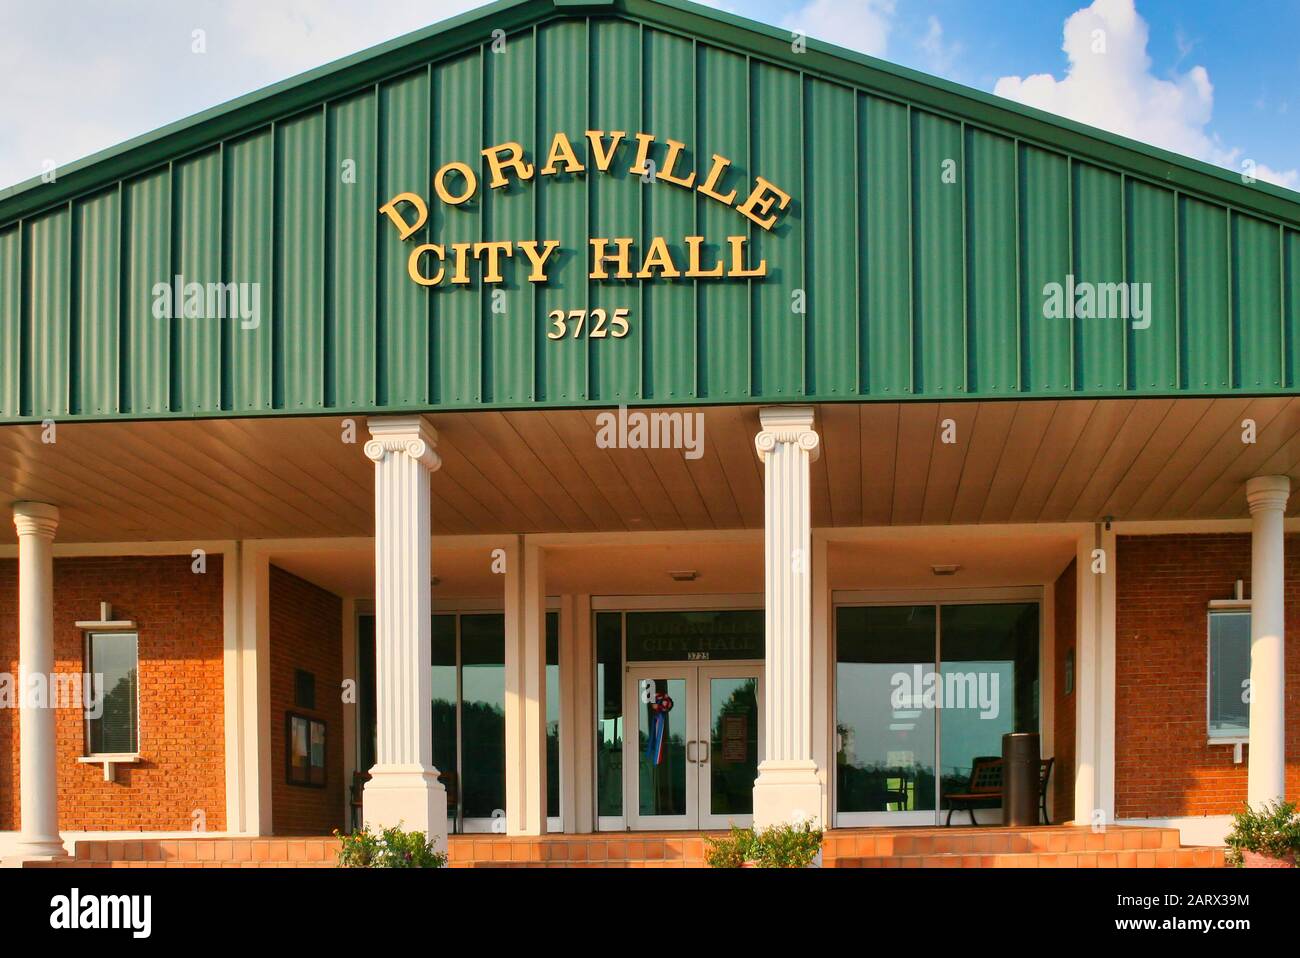 Doraville City Hall Stock Photo